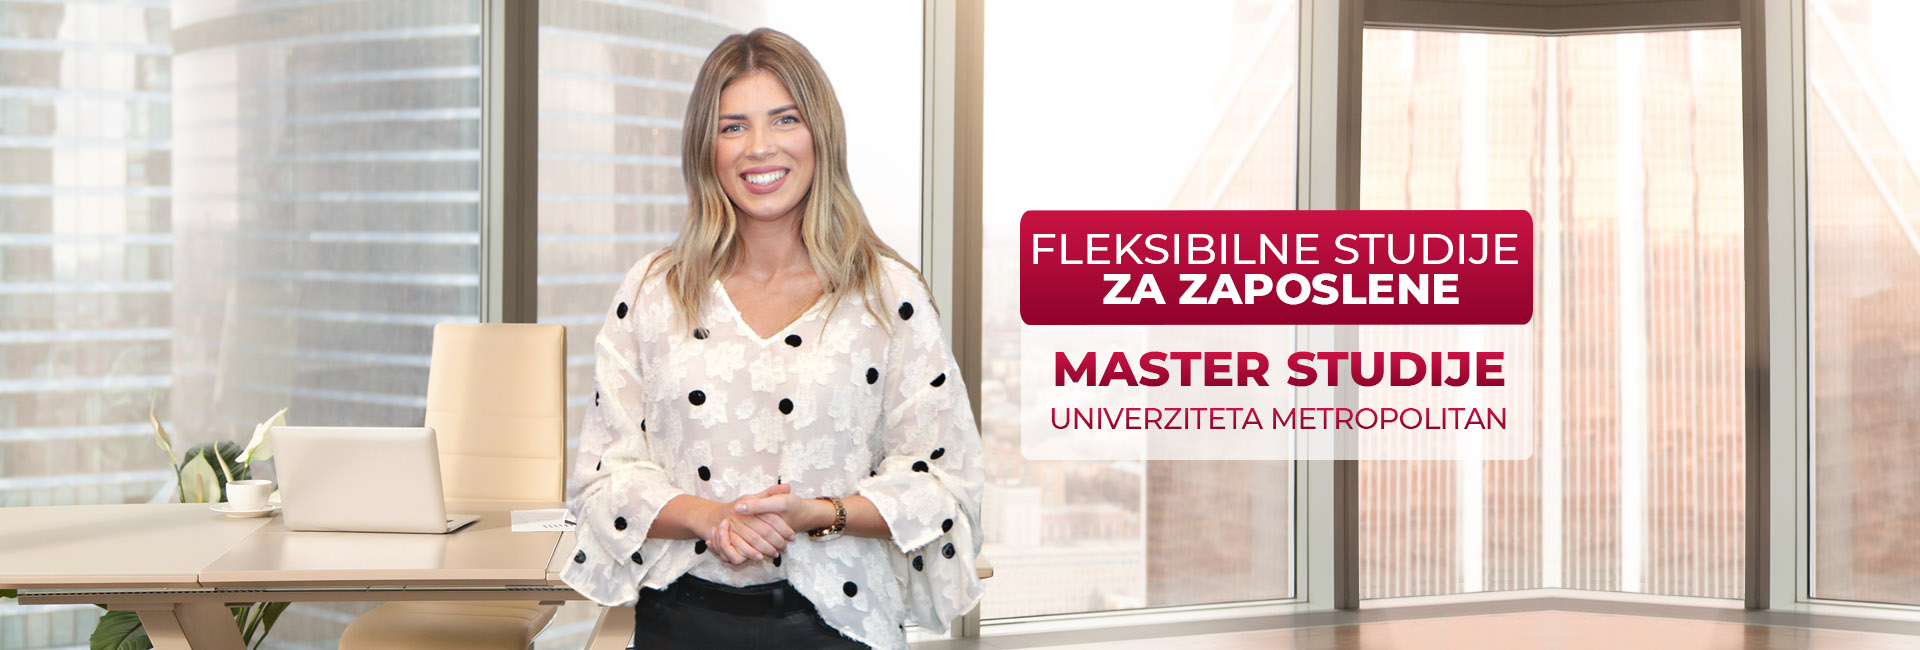 Master studije - Univerzitet Metropolitan